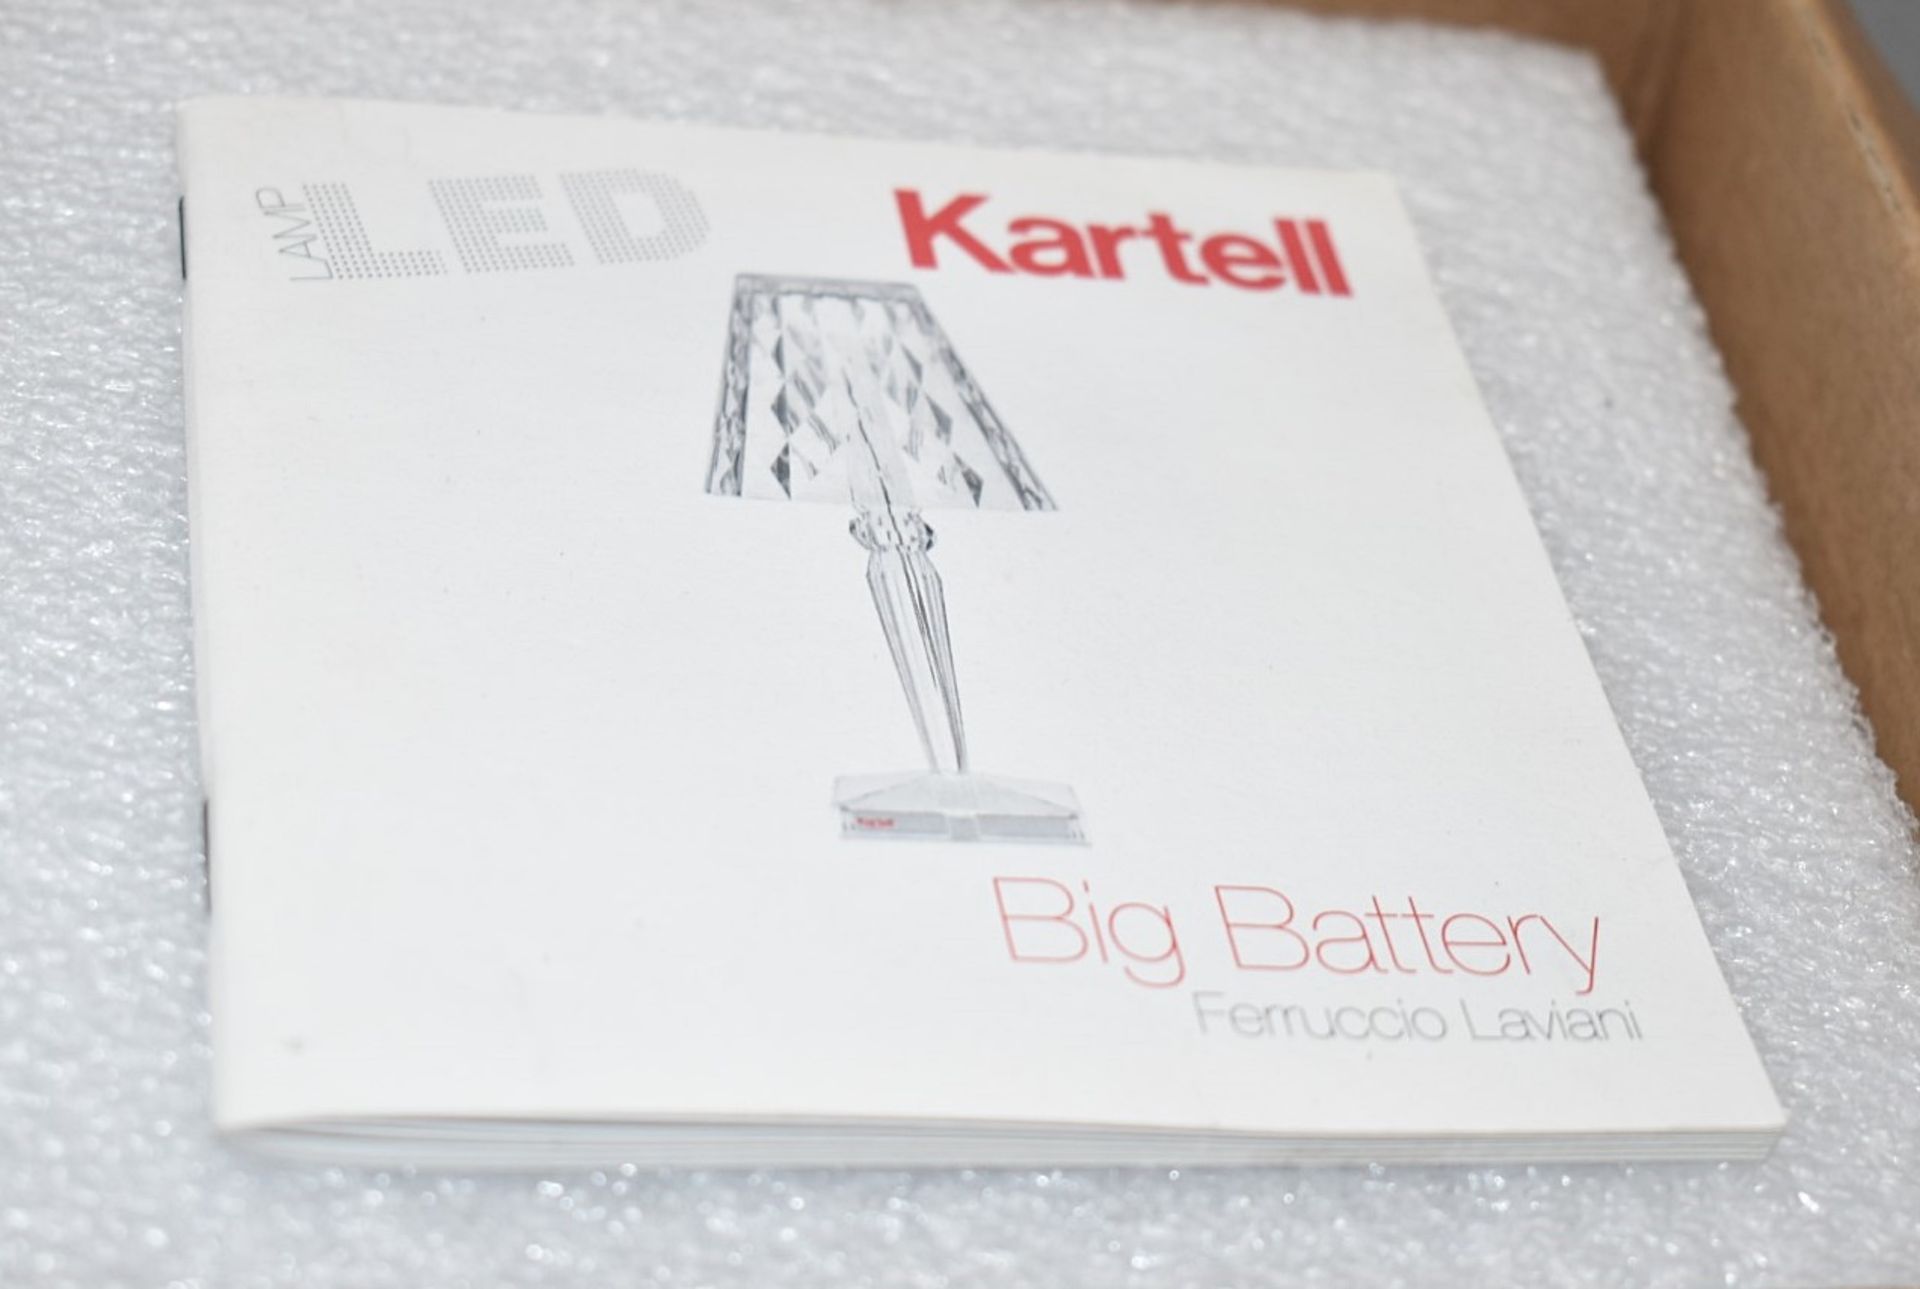 1 x KARTELL 'Big Battery' Designer Table Lamp  - Original Price £200.00 - Unused Boxed Stock - Image 10 of 12